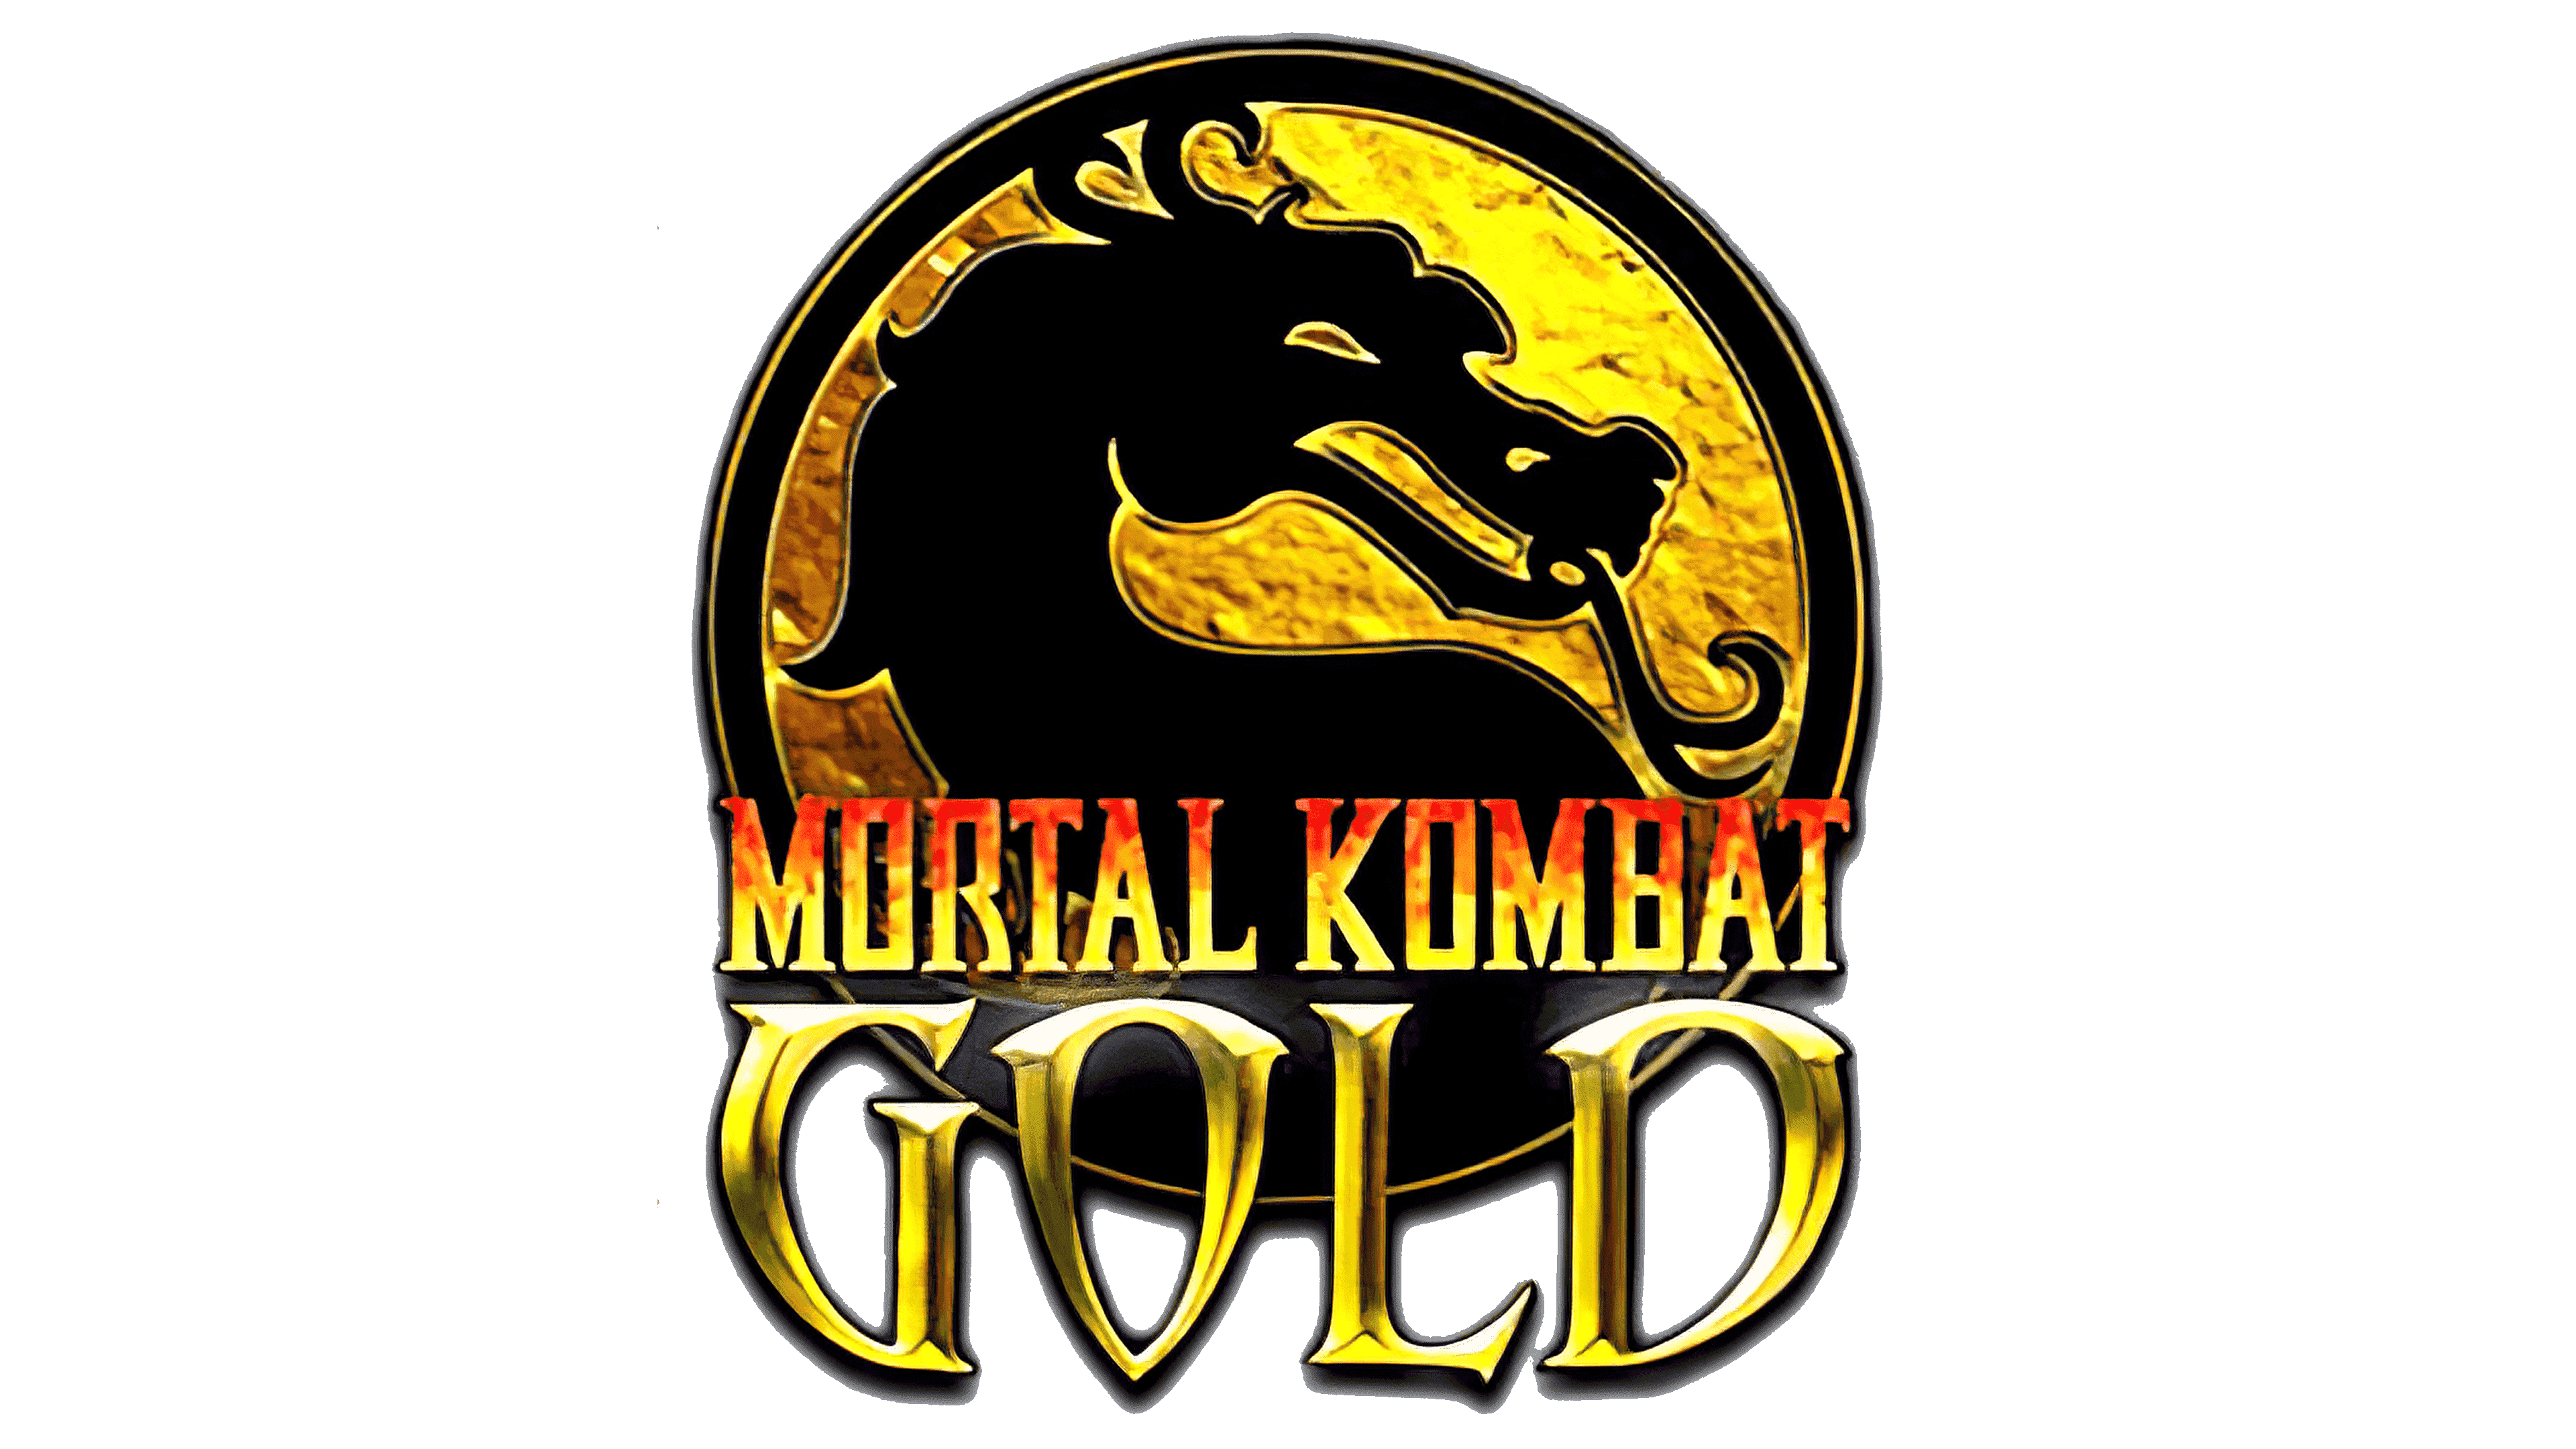 Мортал комбат 4 Голд. MK Gold Dreamcast. Mortal Kombat Gold. Mortal Kombat Gold (1999). Души и монеты мортал комбат